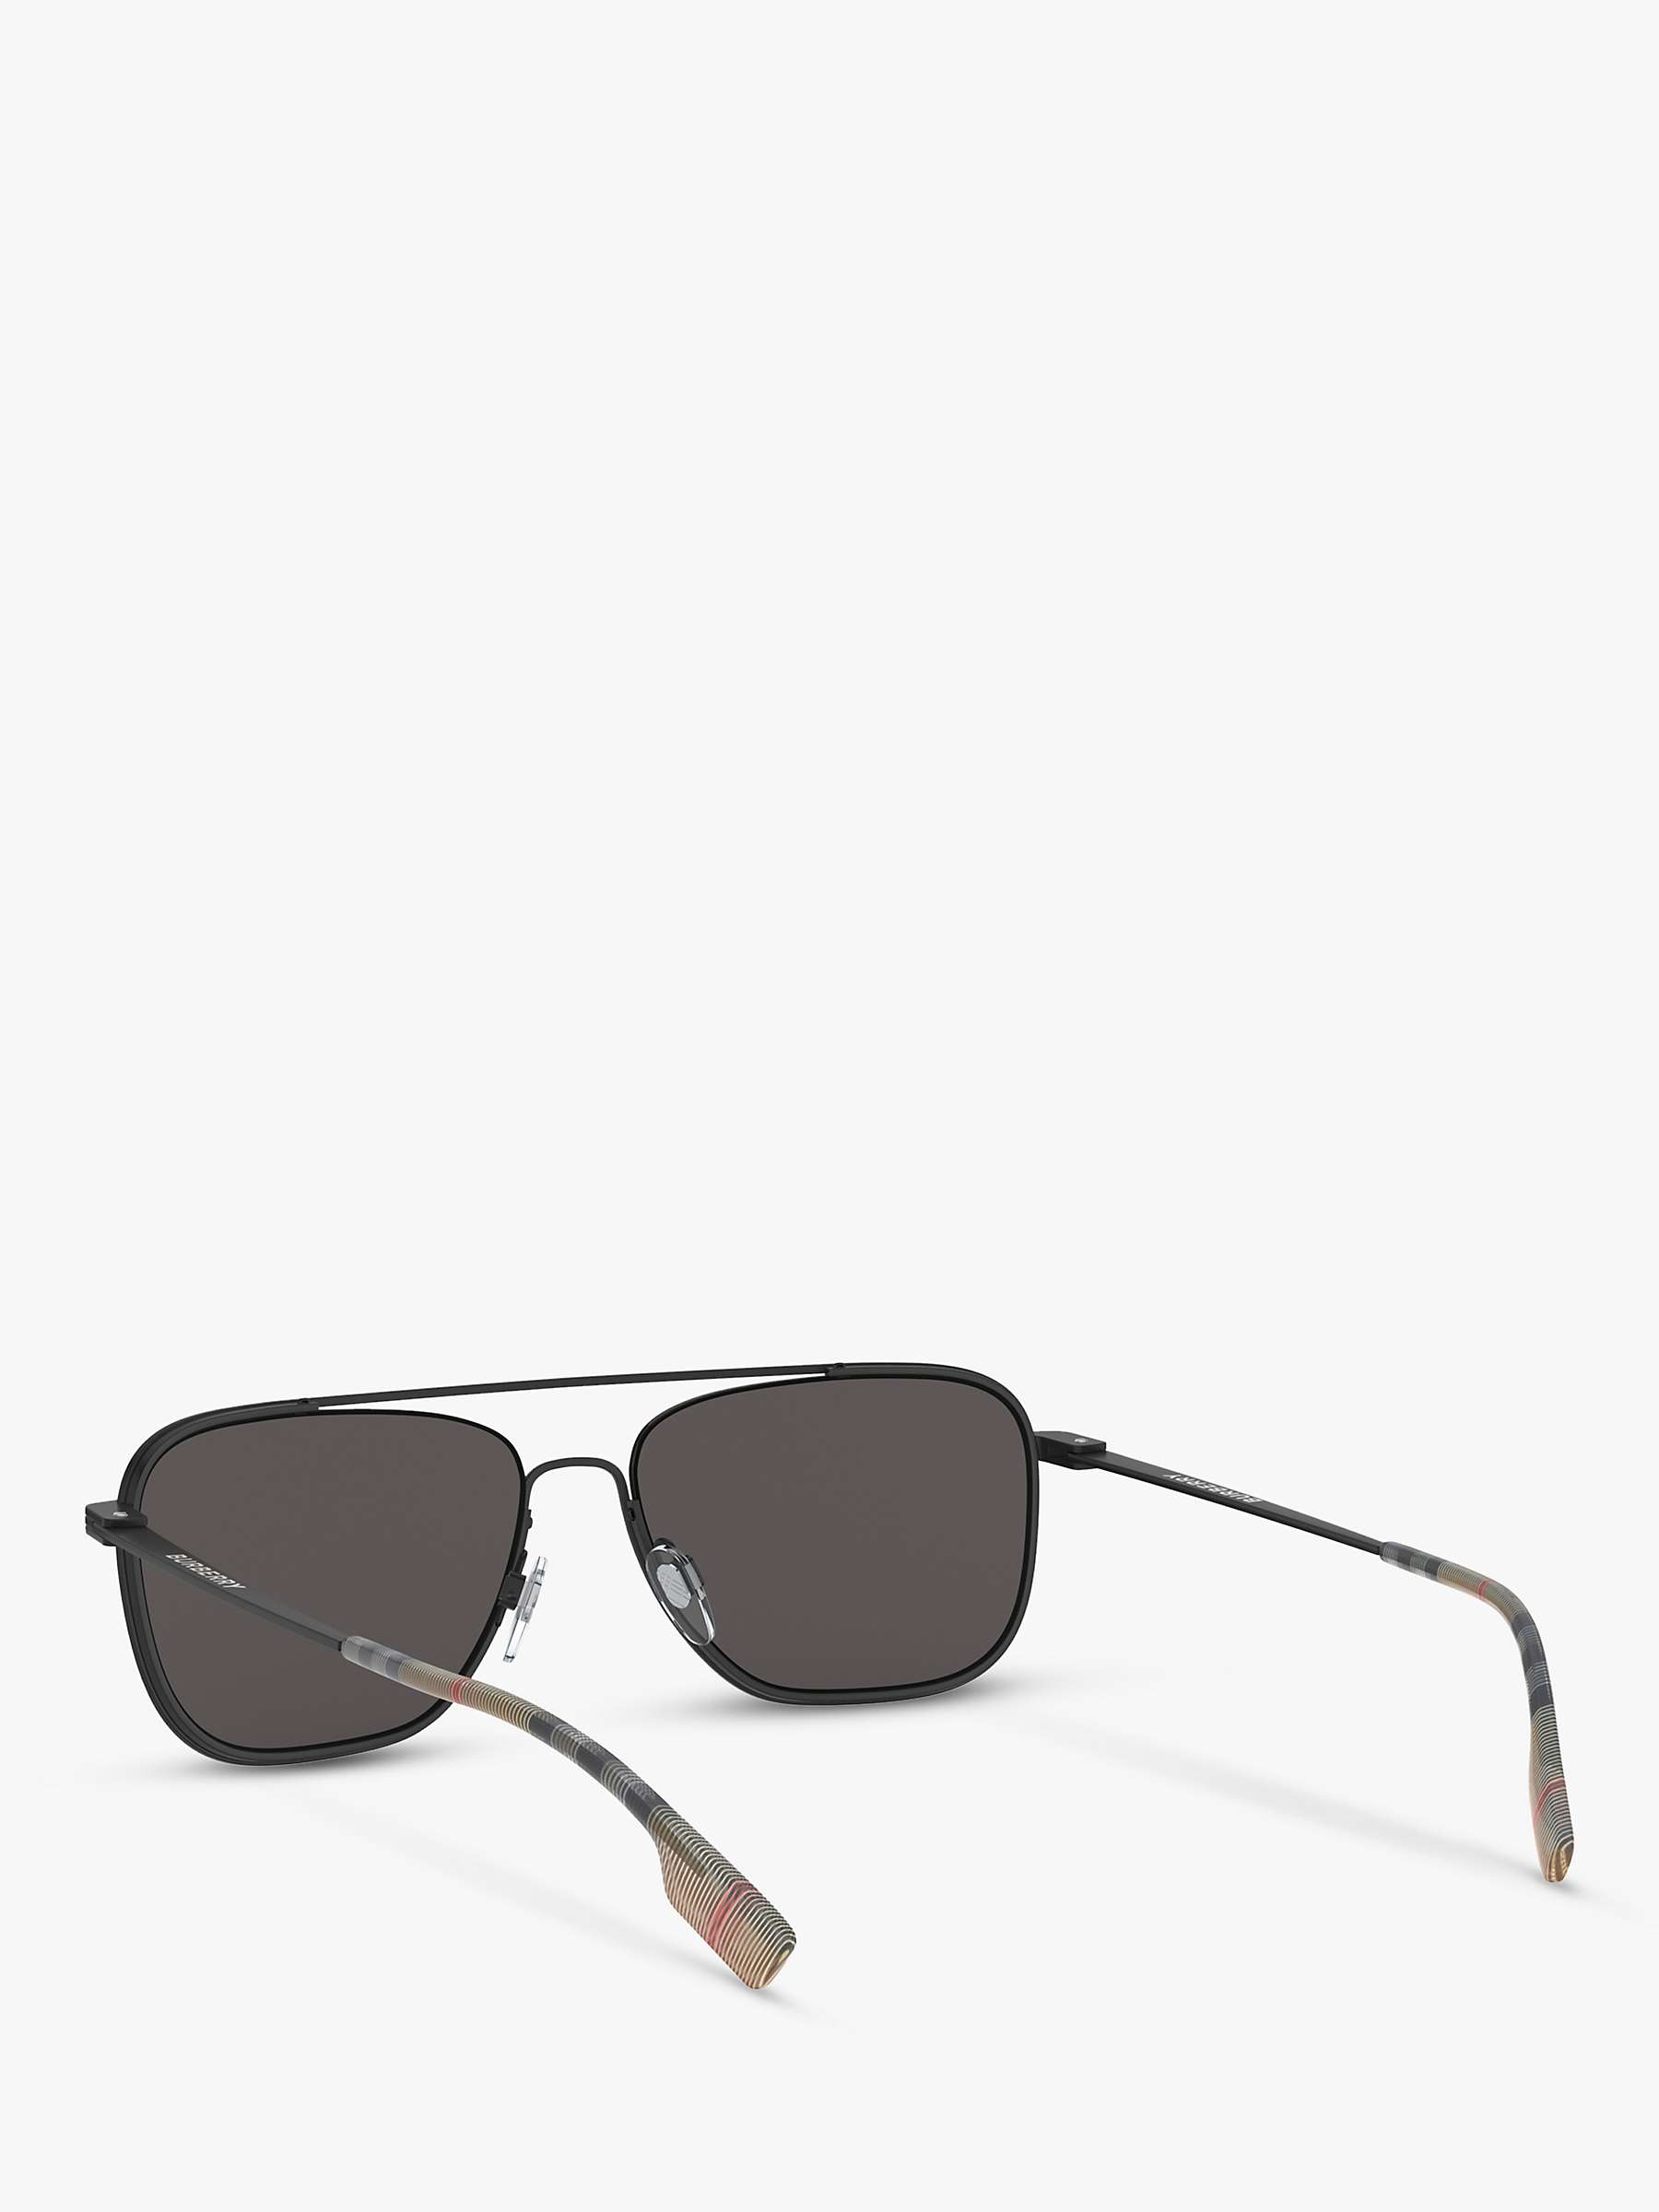 Buy Burberry BE3112 Men's Square Sunglasses, Matte Black/Grey Online at johnlewis.com